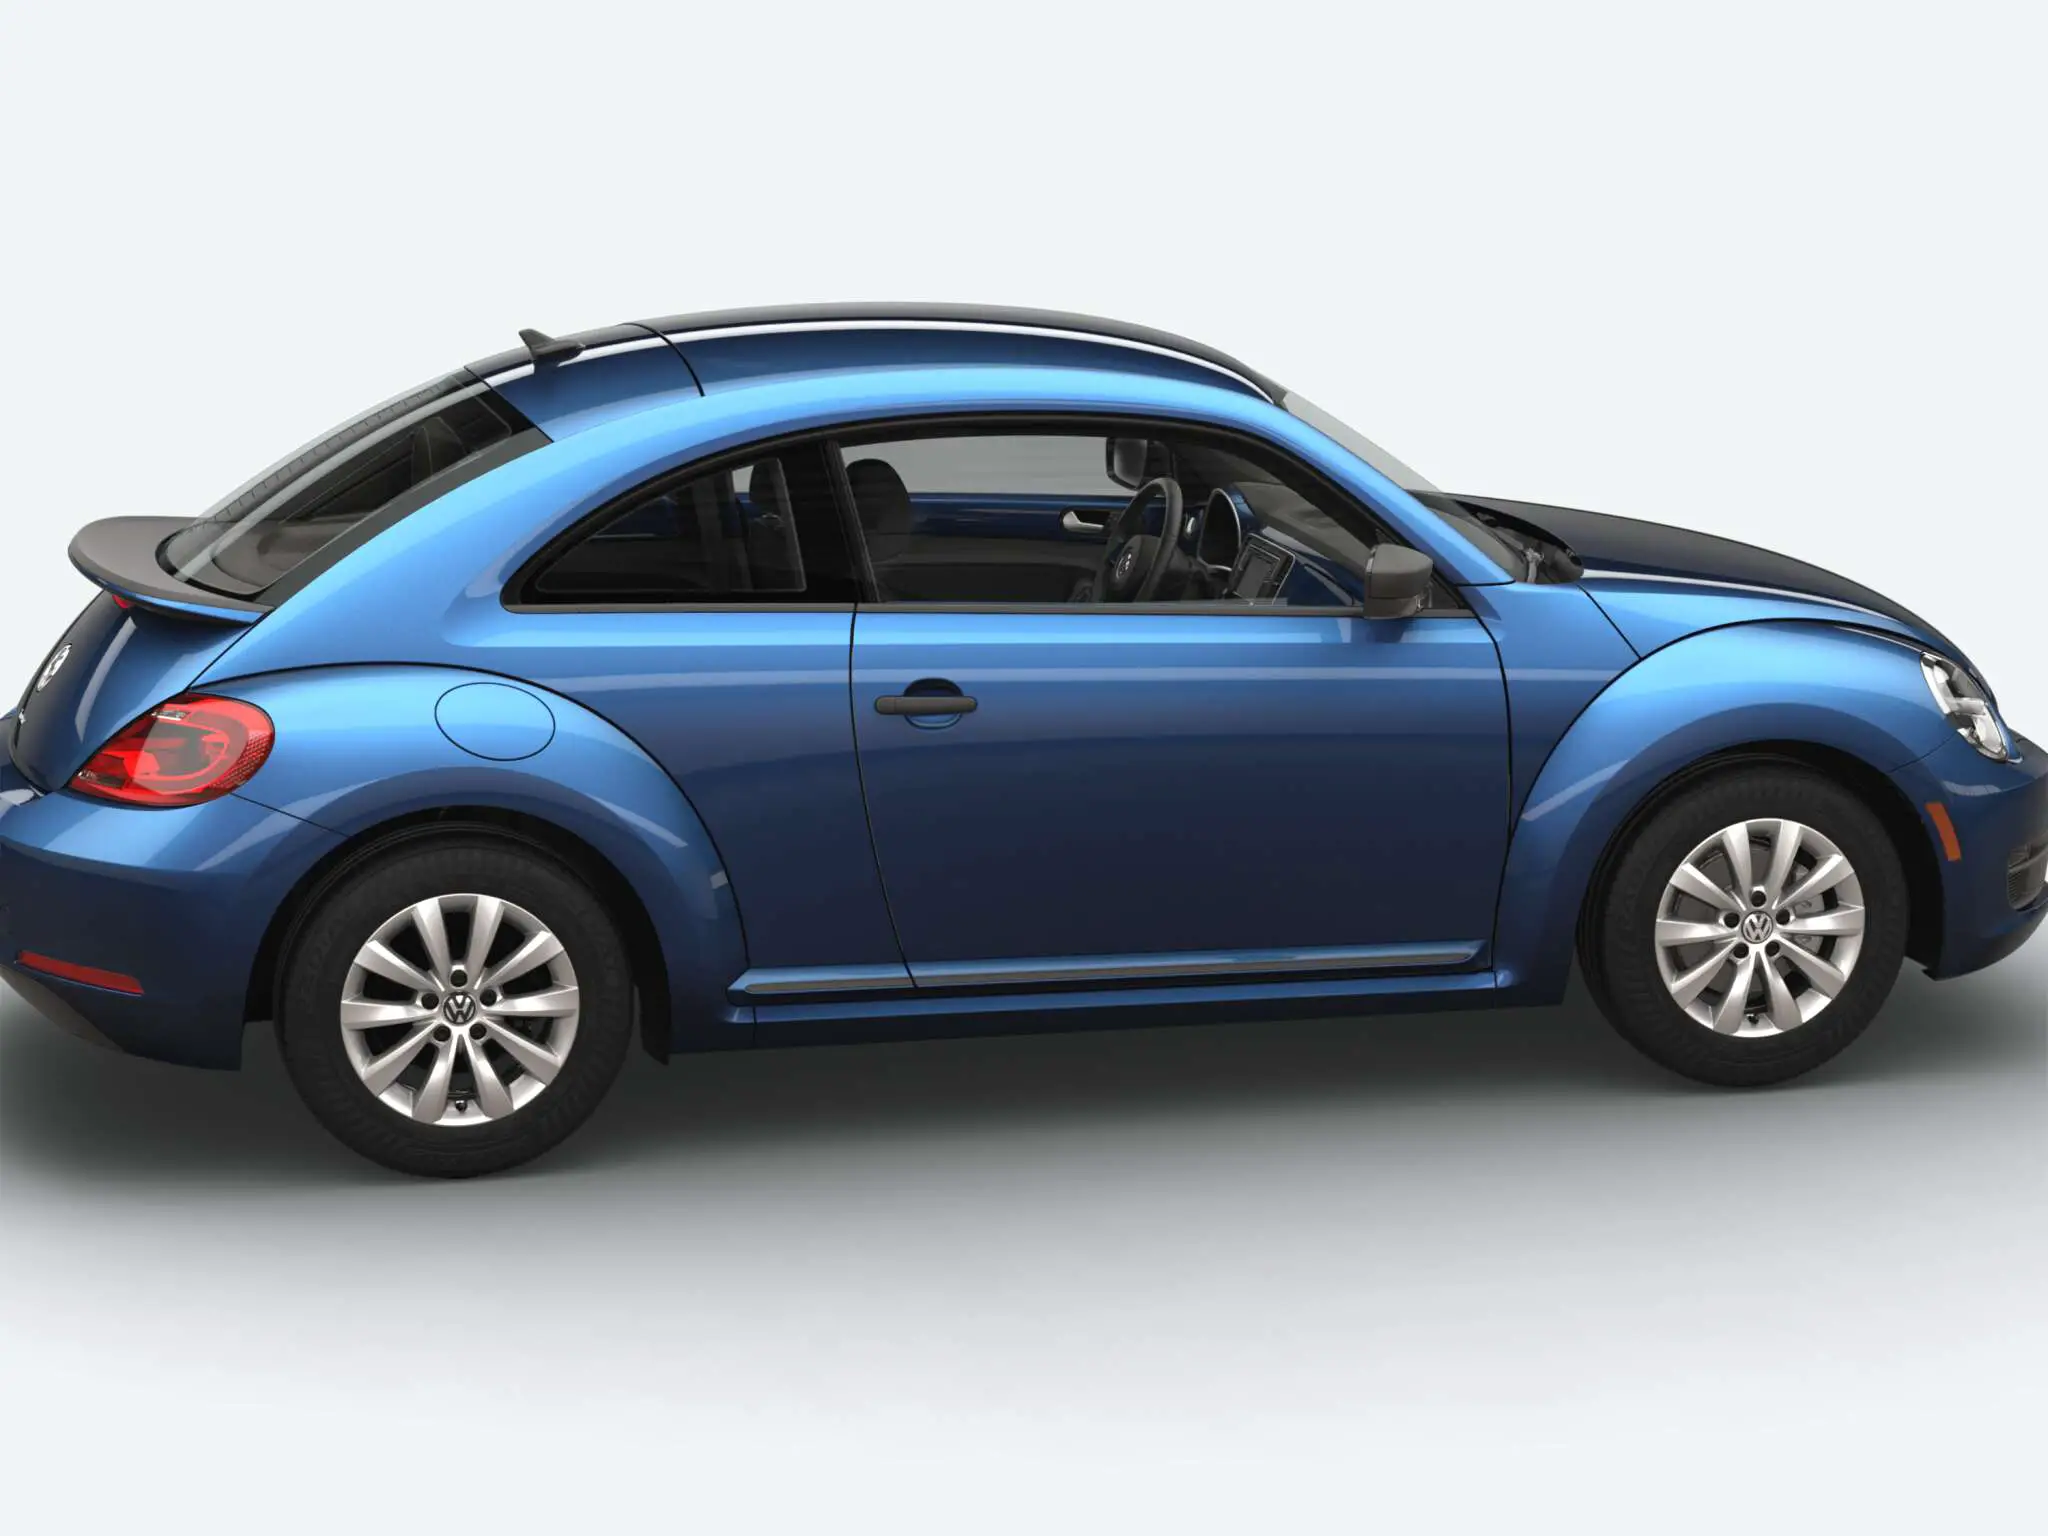 Volkswagen Beetle SE side view